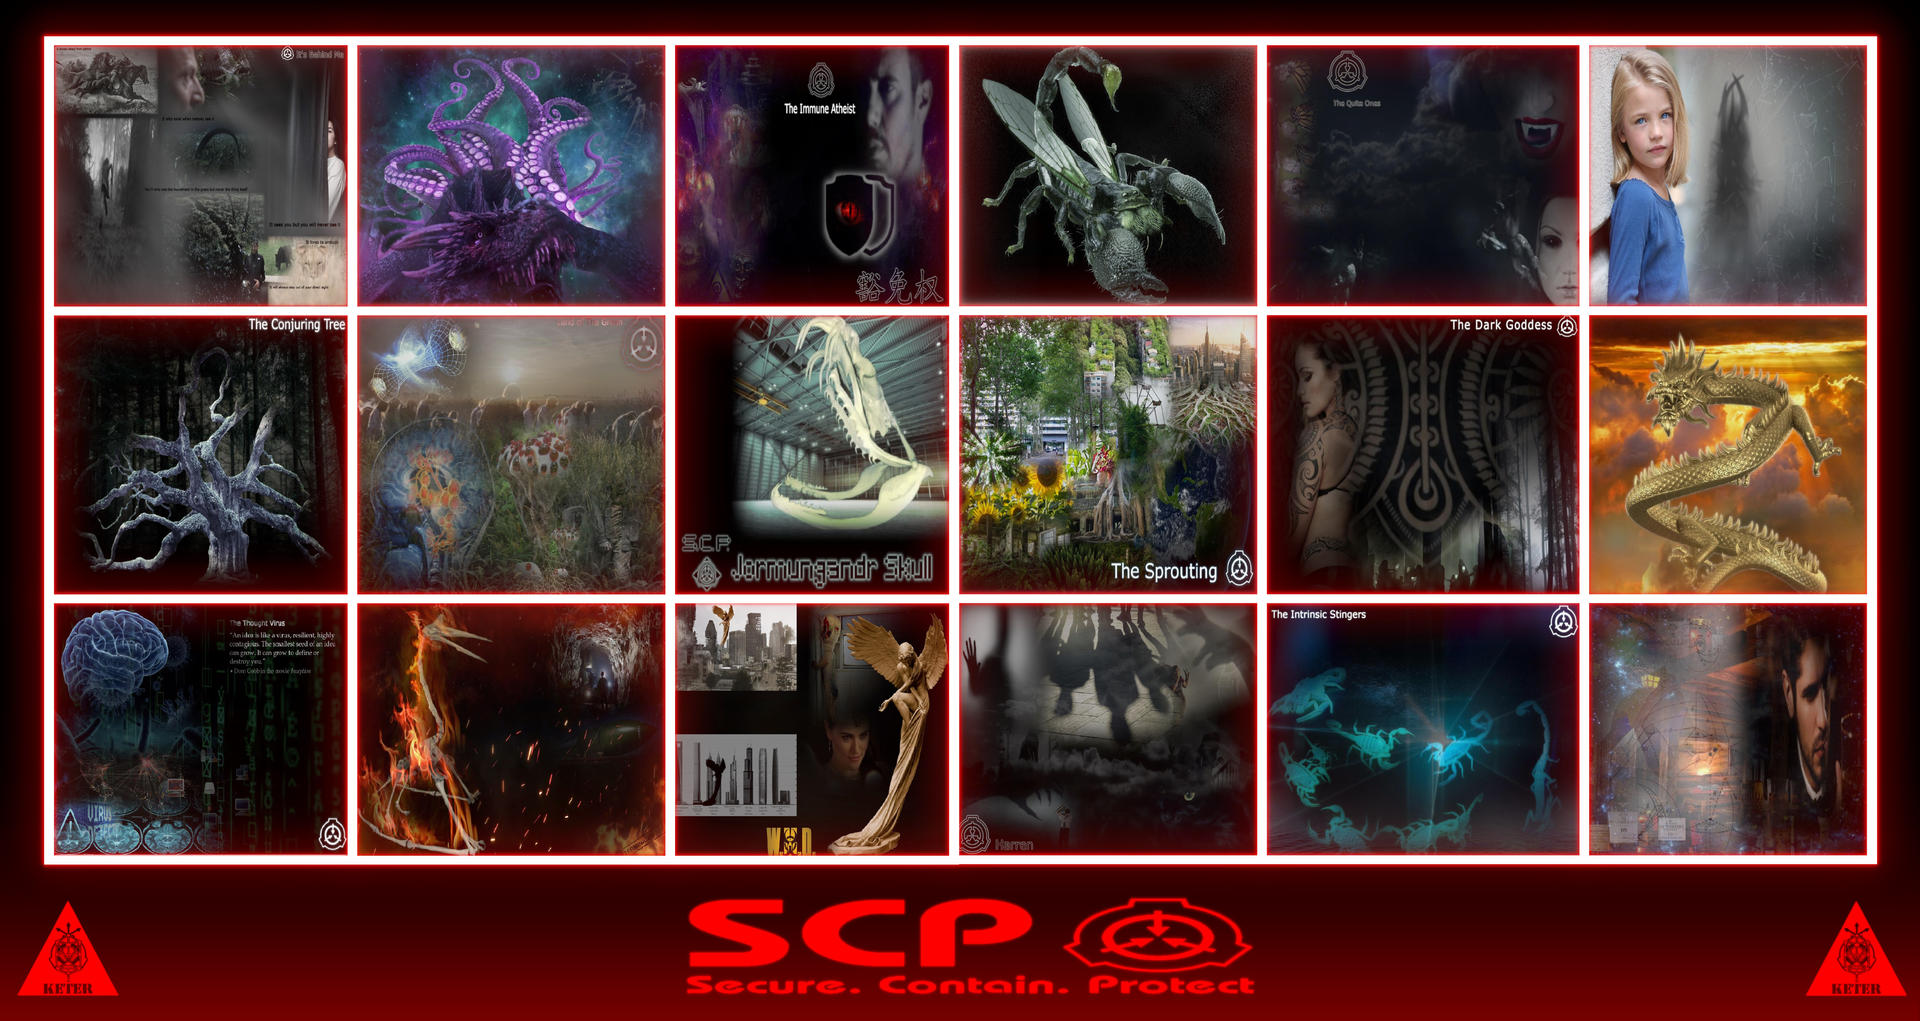 SCP - A Netflix Original Series - SCP Foundation